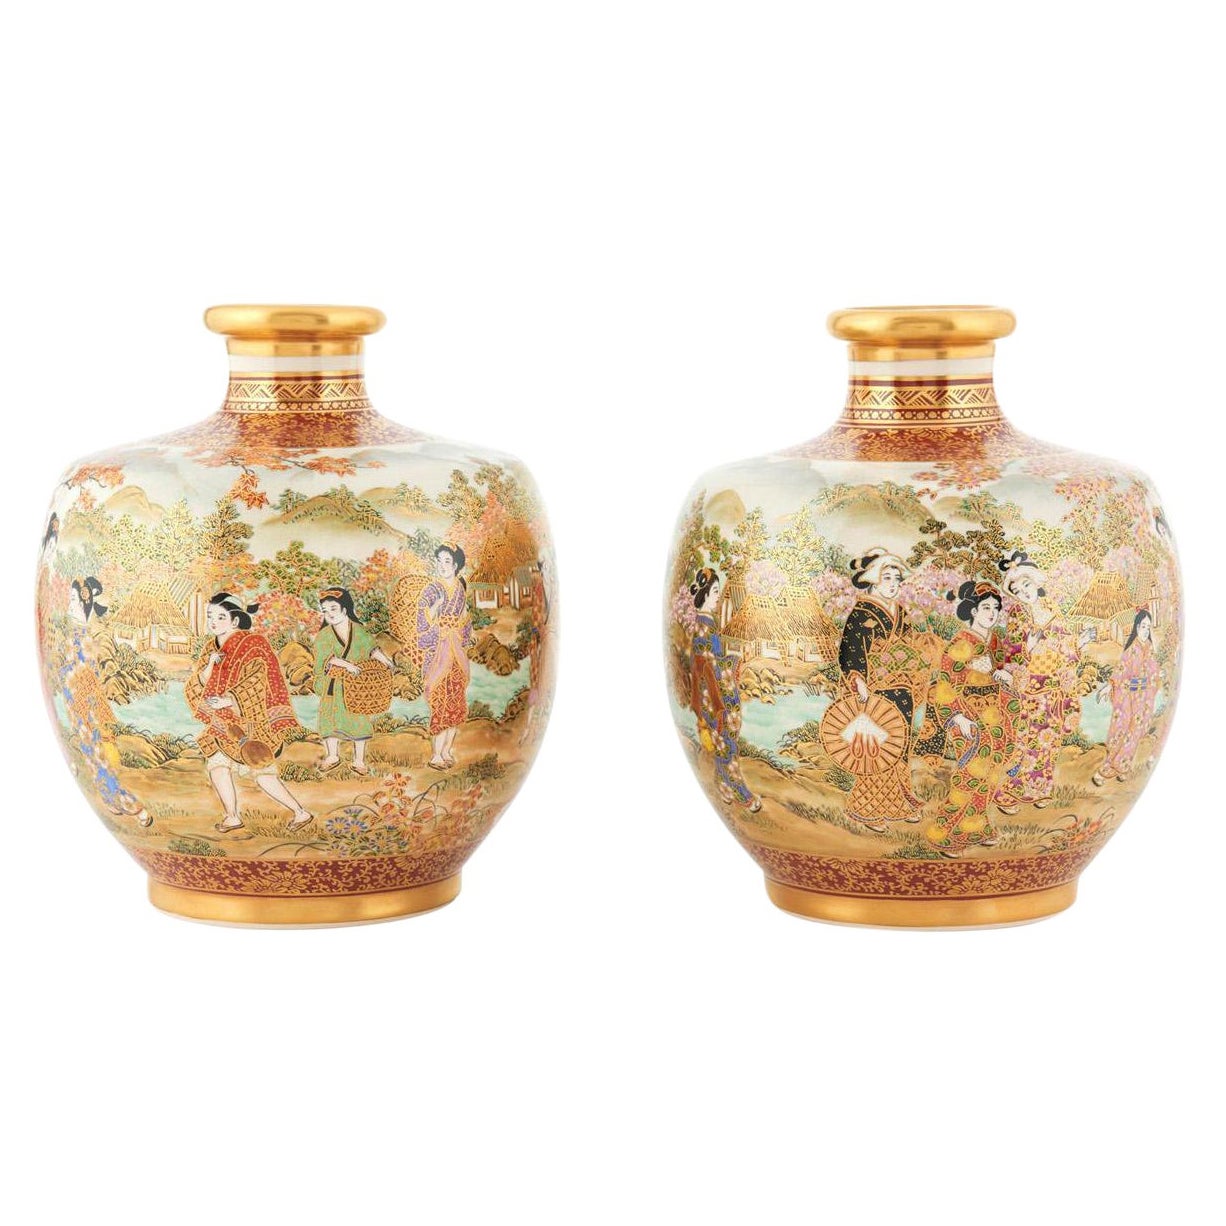 Pair of Fine Japanese Satsuma Vases, Ogawa Yozan Studio, First Half 20th Century